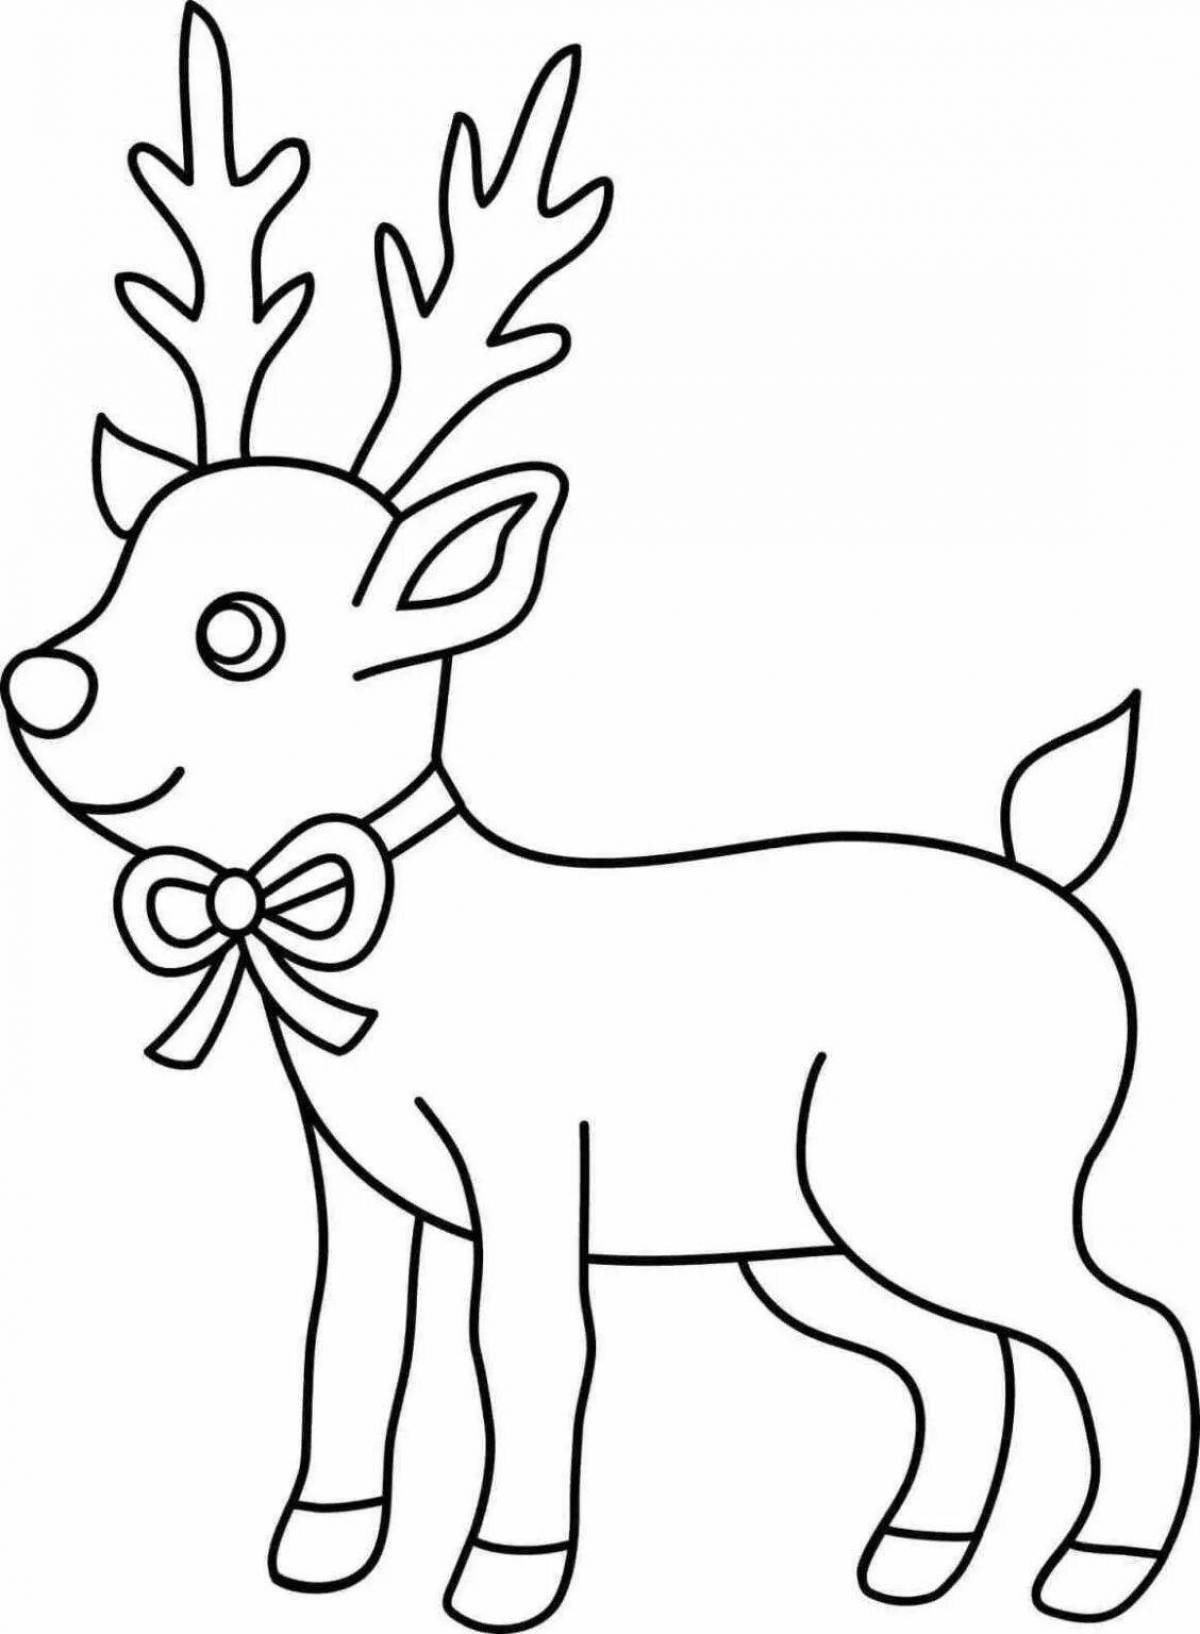 Impressive deer coloring page